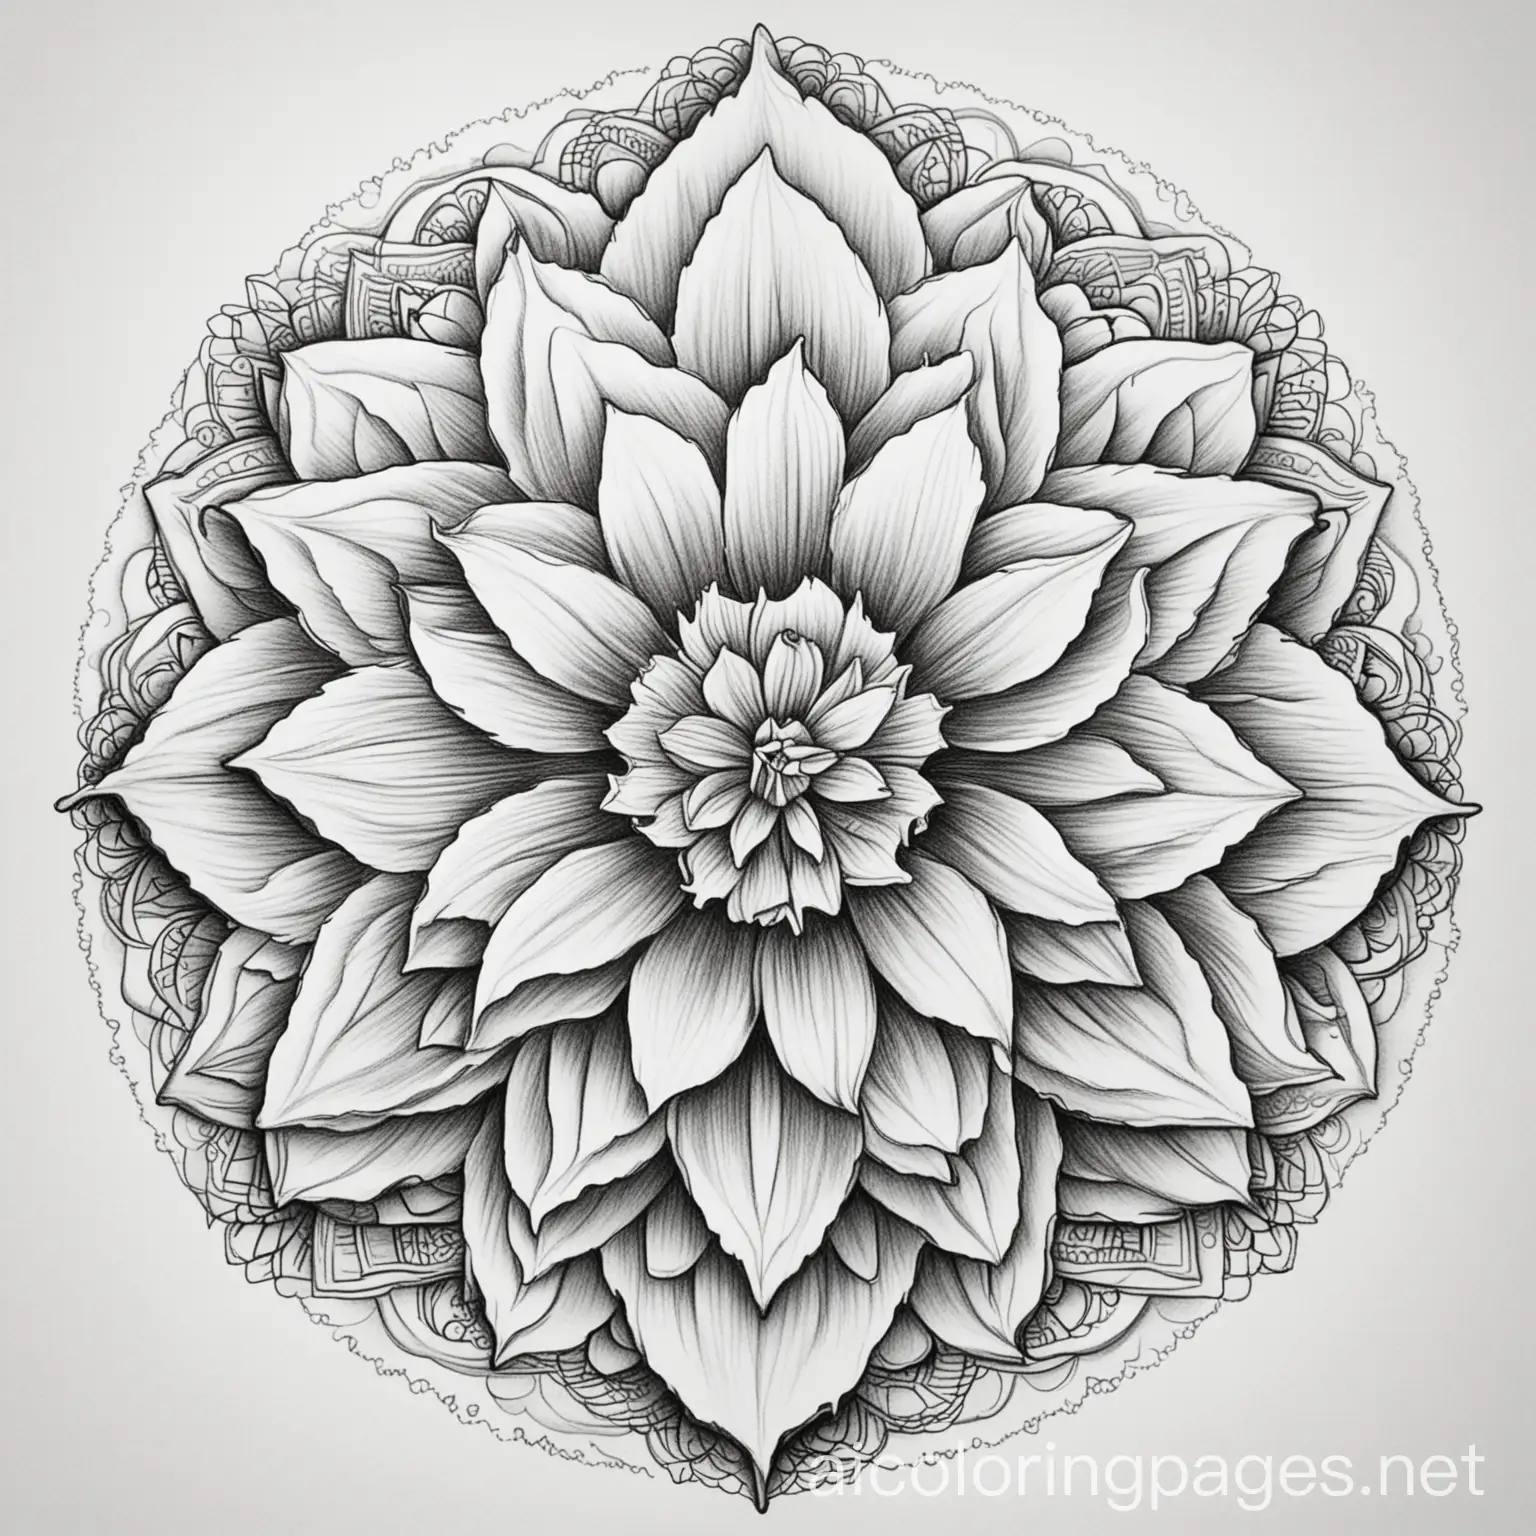 Detailed-Mandala-Coloring-Page-for-Adults-Beautiful-Gardenia-Design